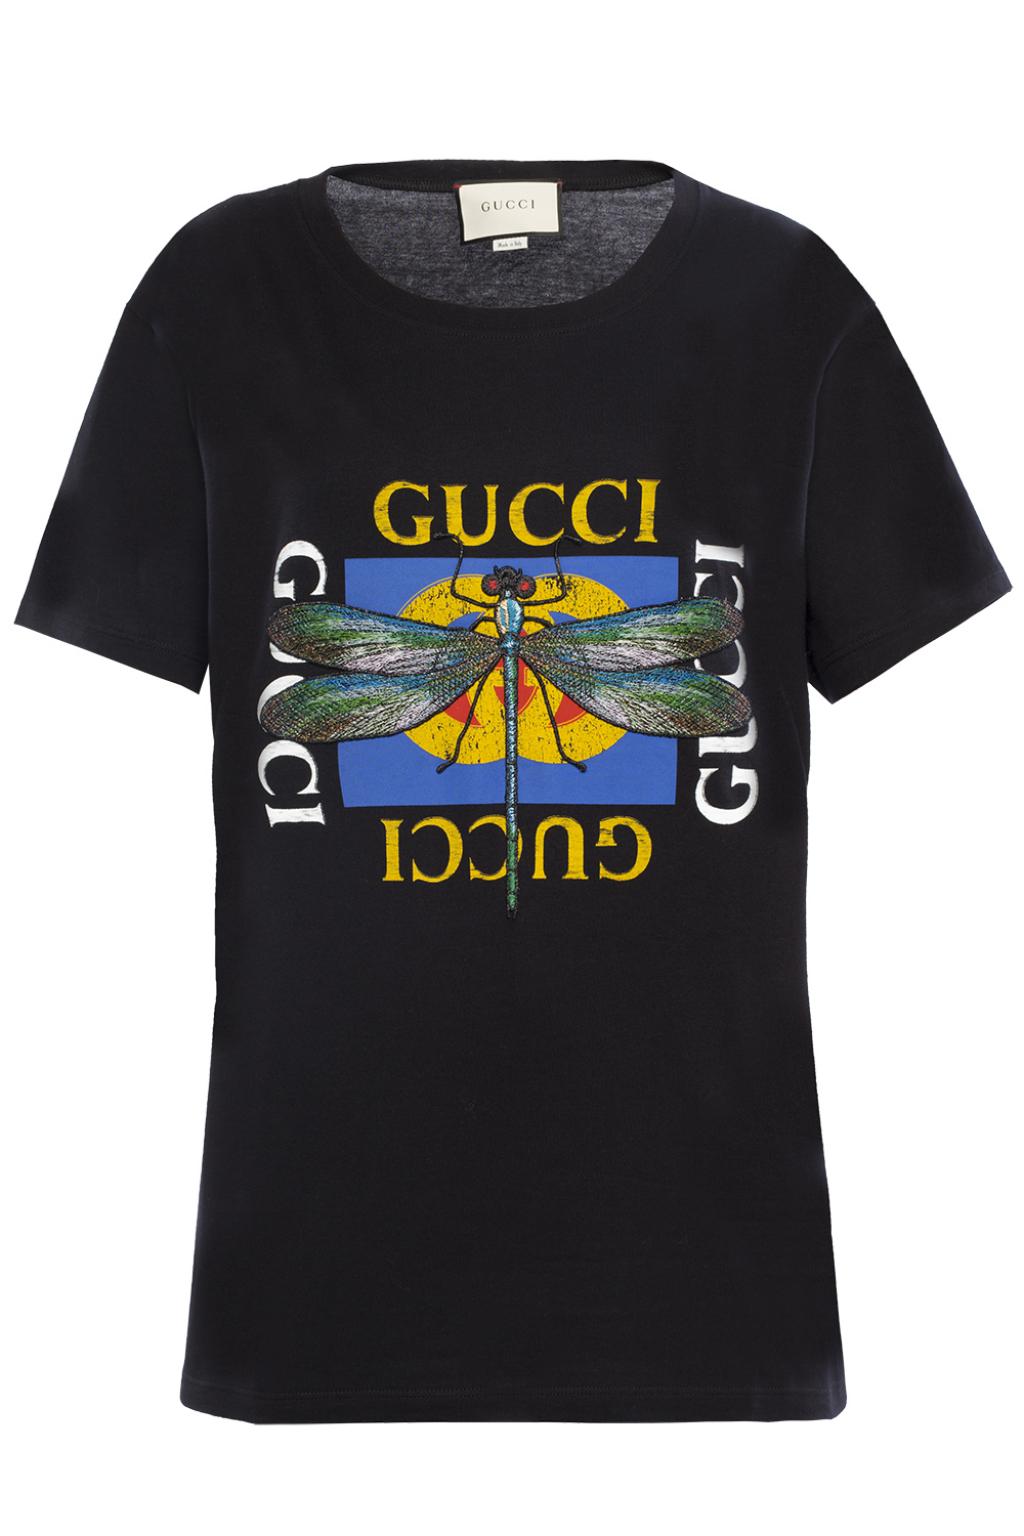 gucci dragonfly shirt